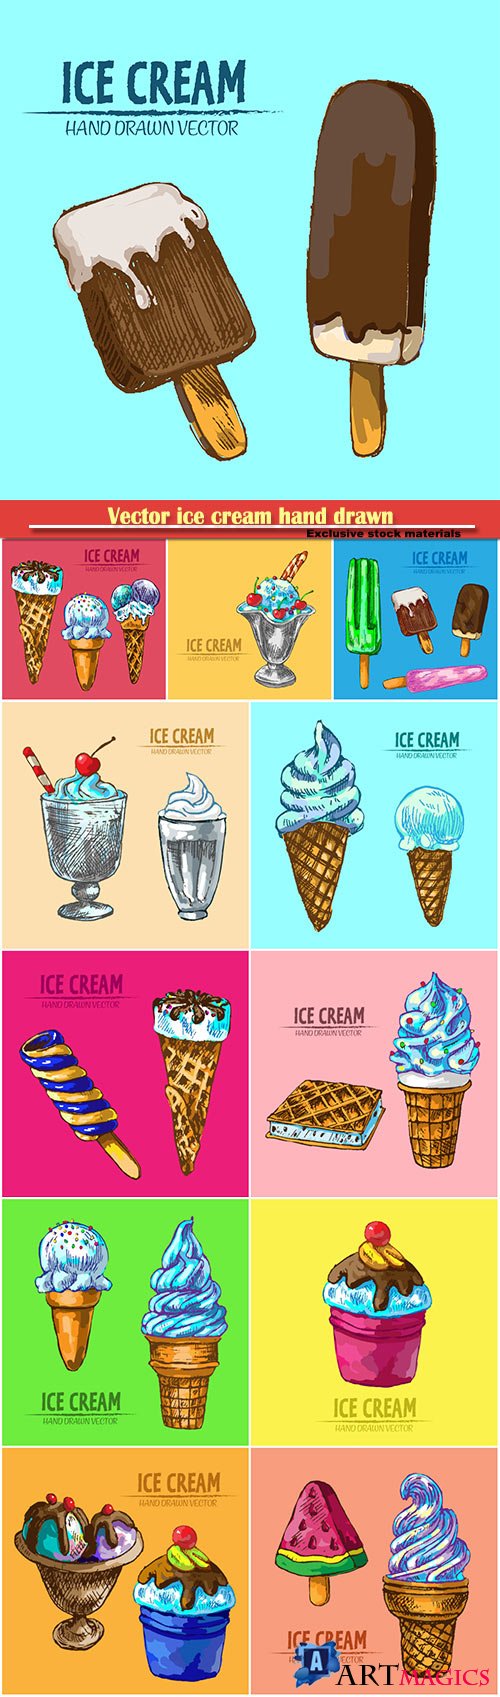 Vector ice cream hand drawn retro illustration collection set